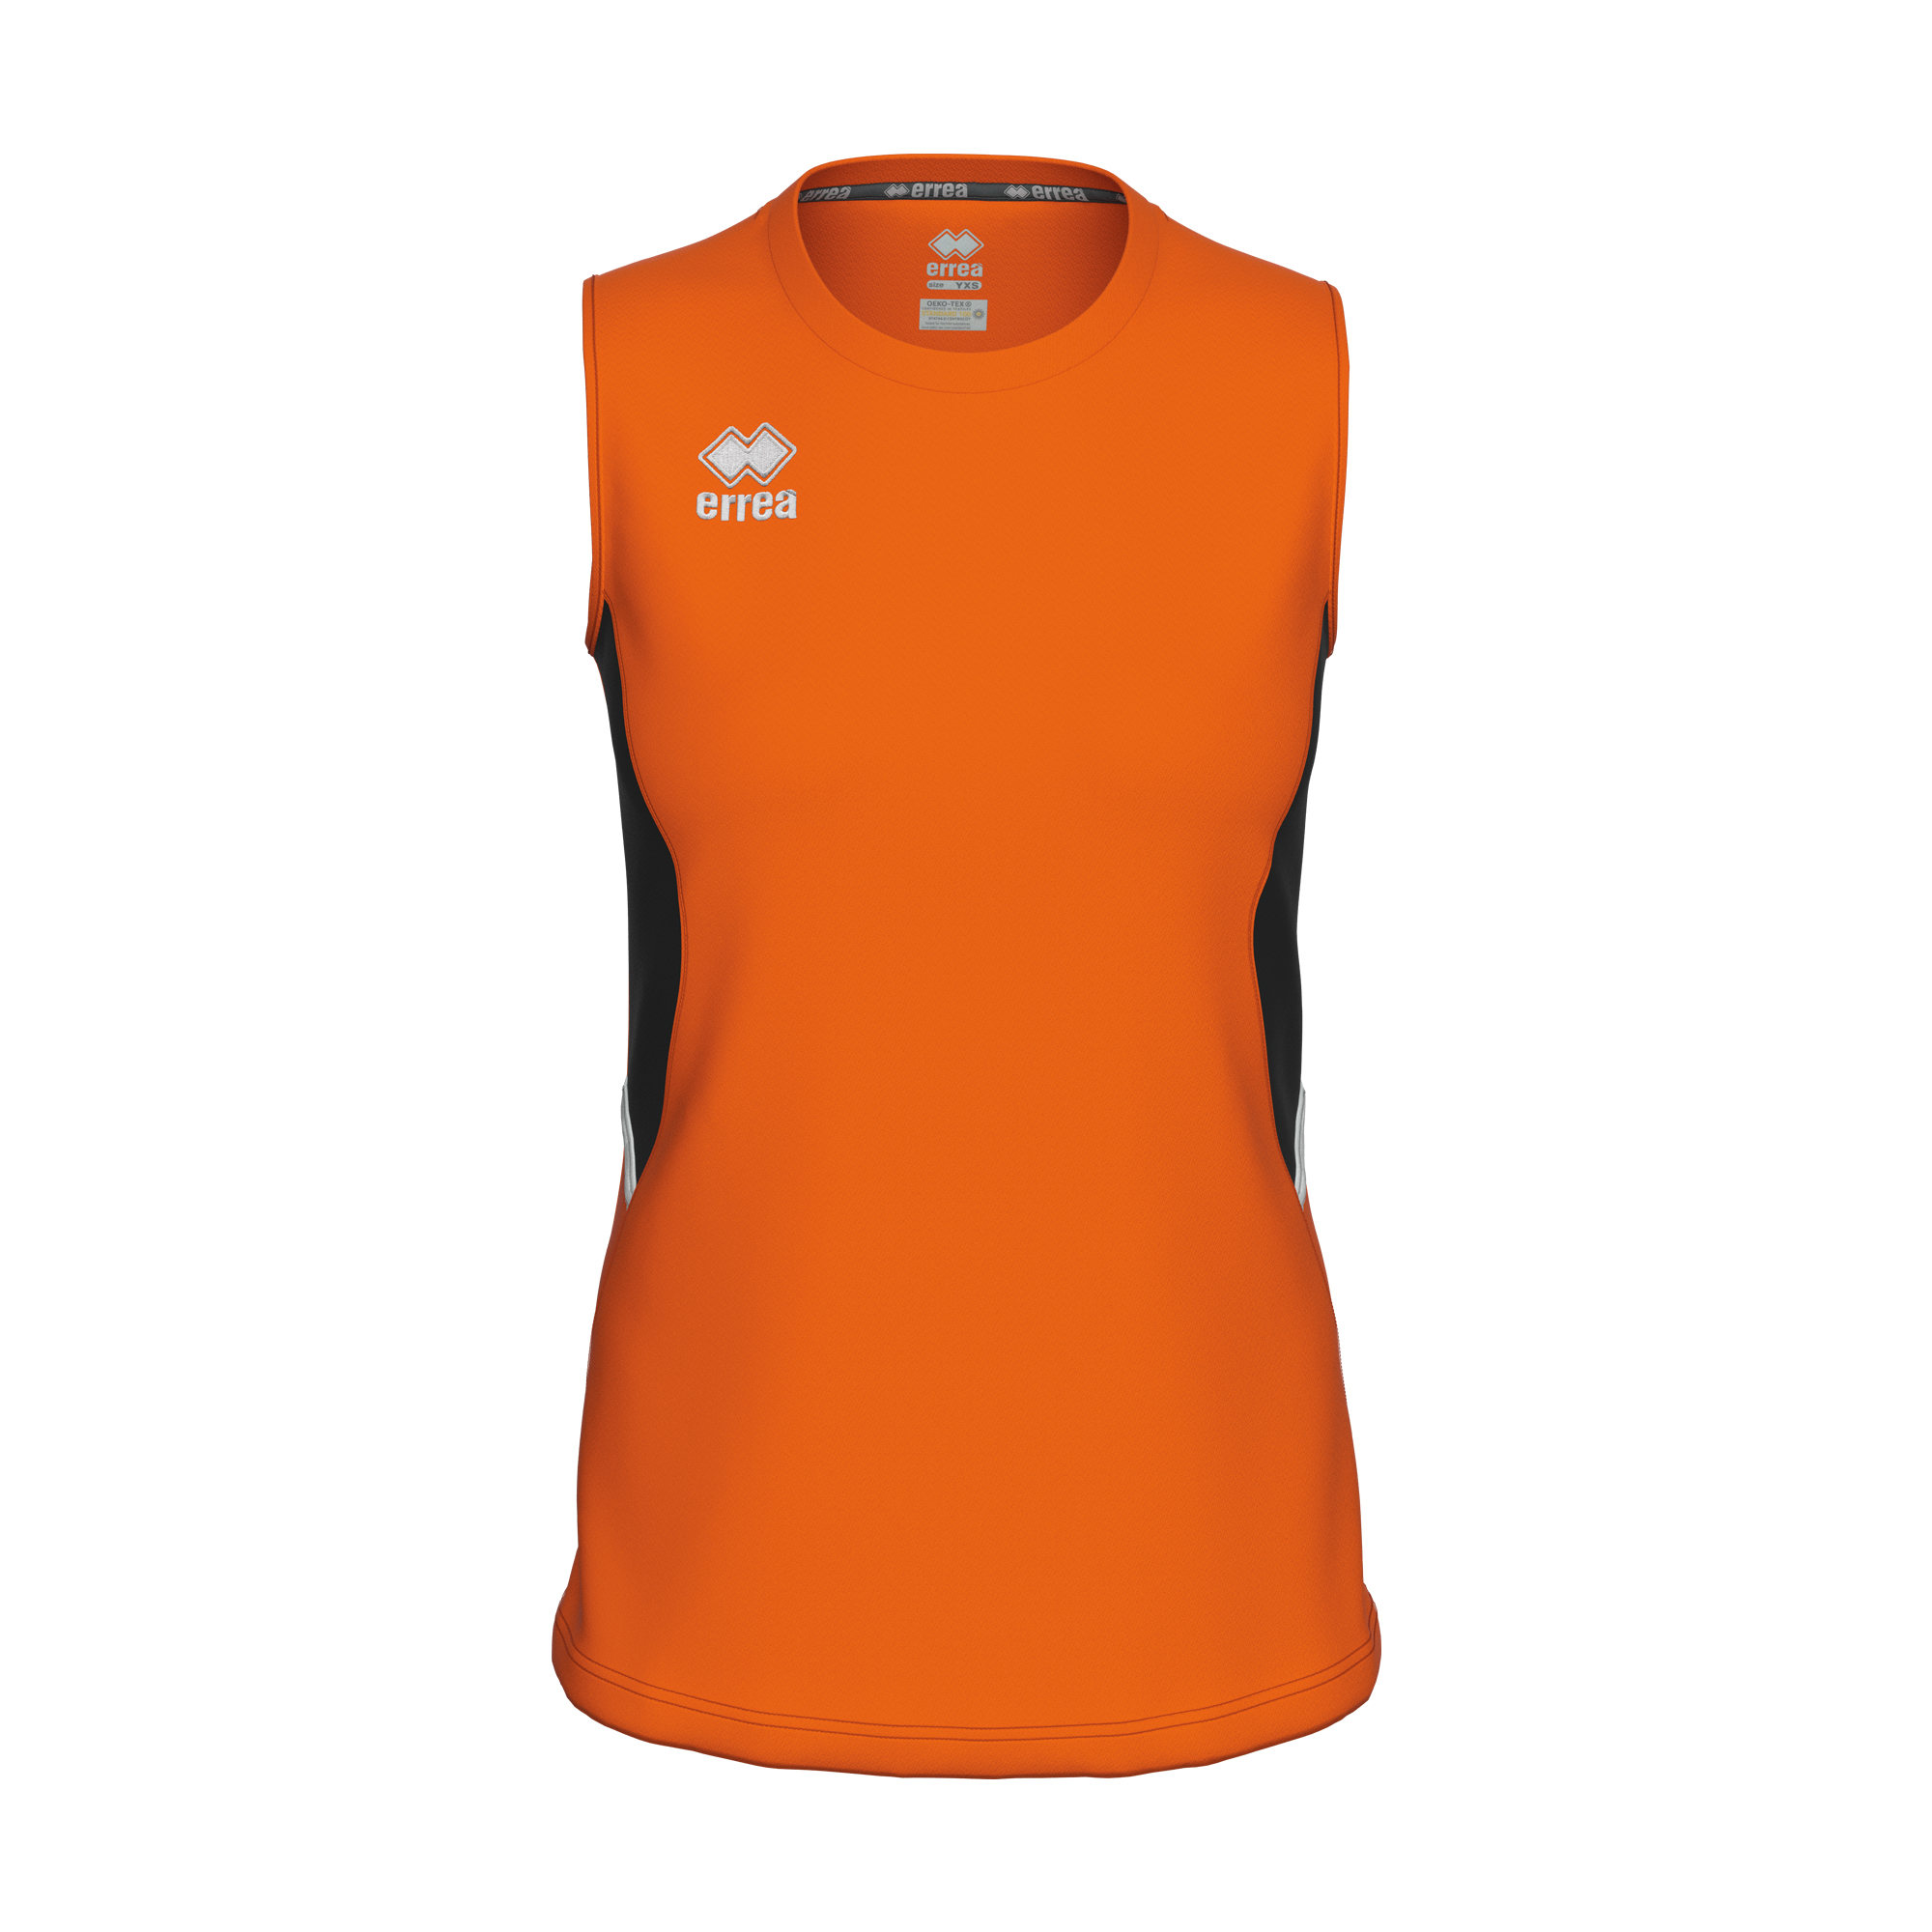 Errea Carry Volleyball Shirt Orange Black White